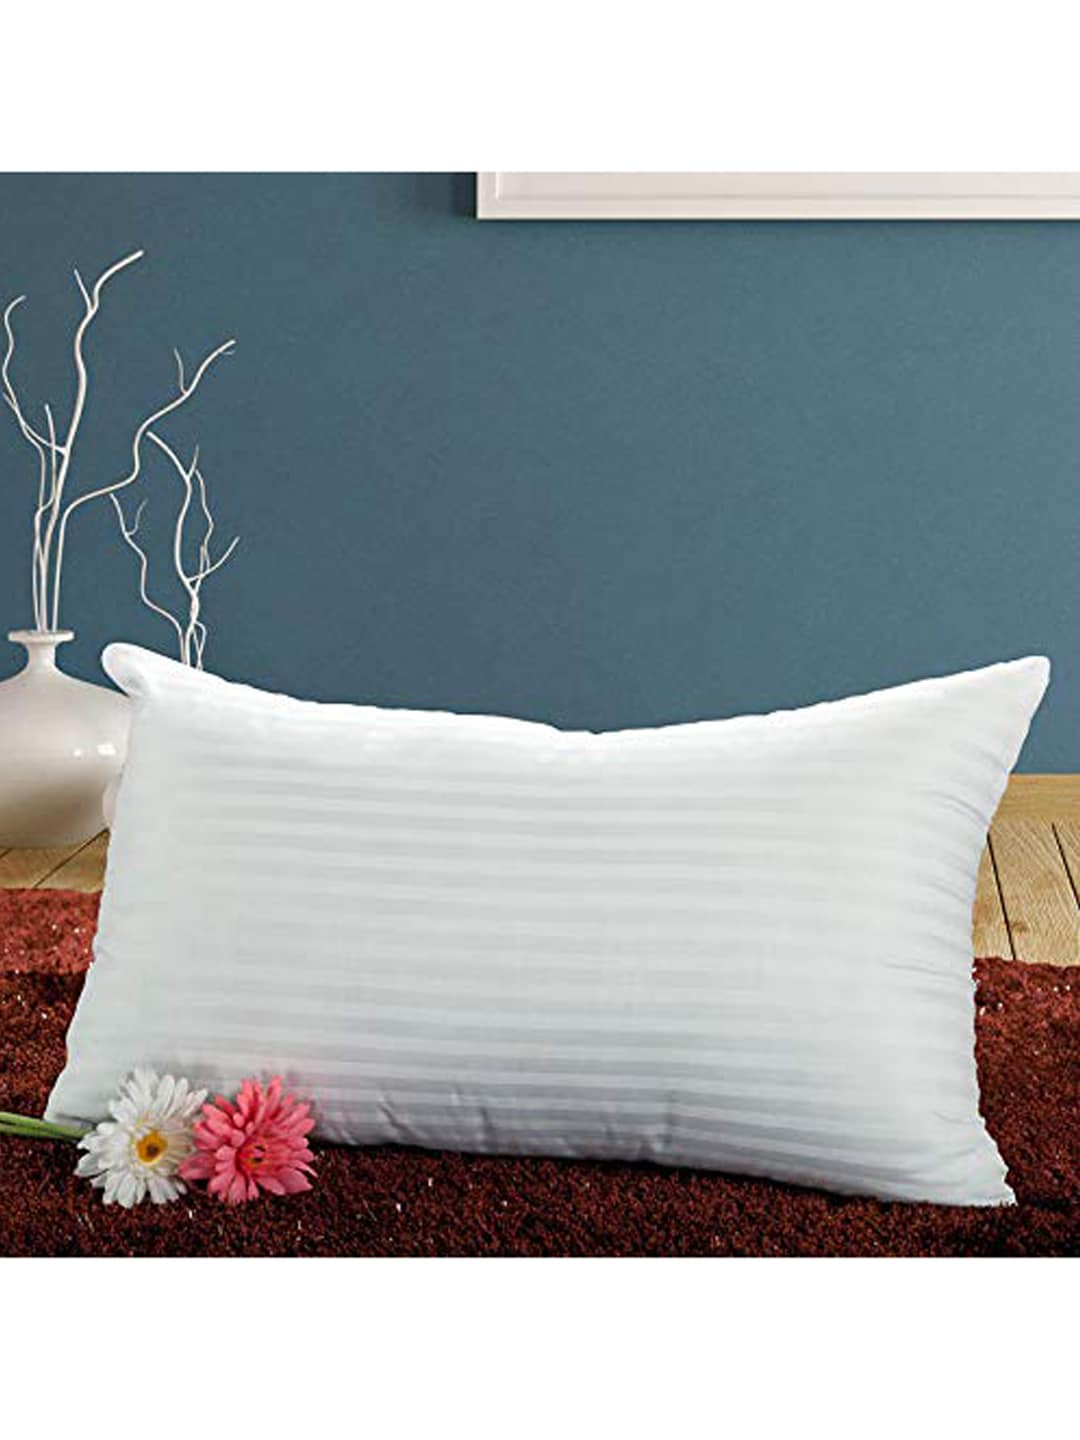 JDX Set of 4 White Striped Rectangular Pillows Price in India